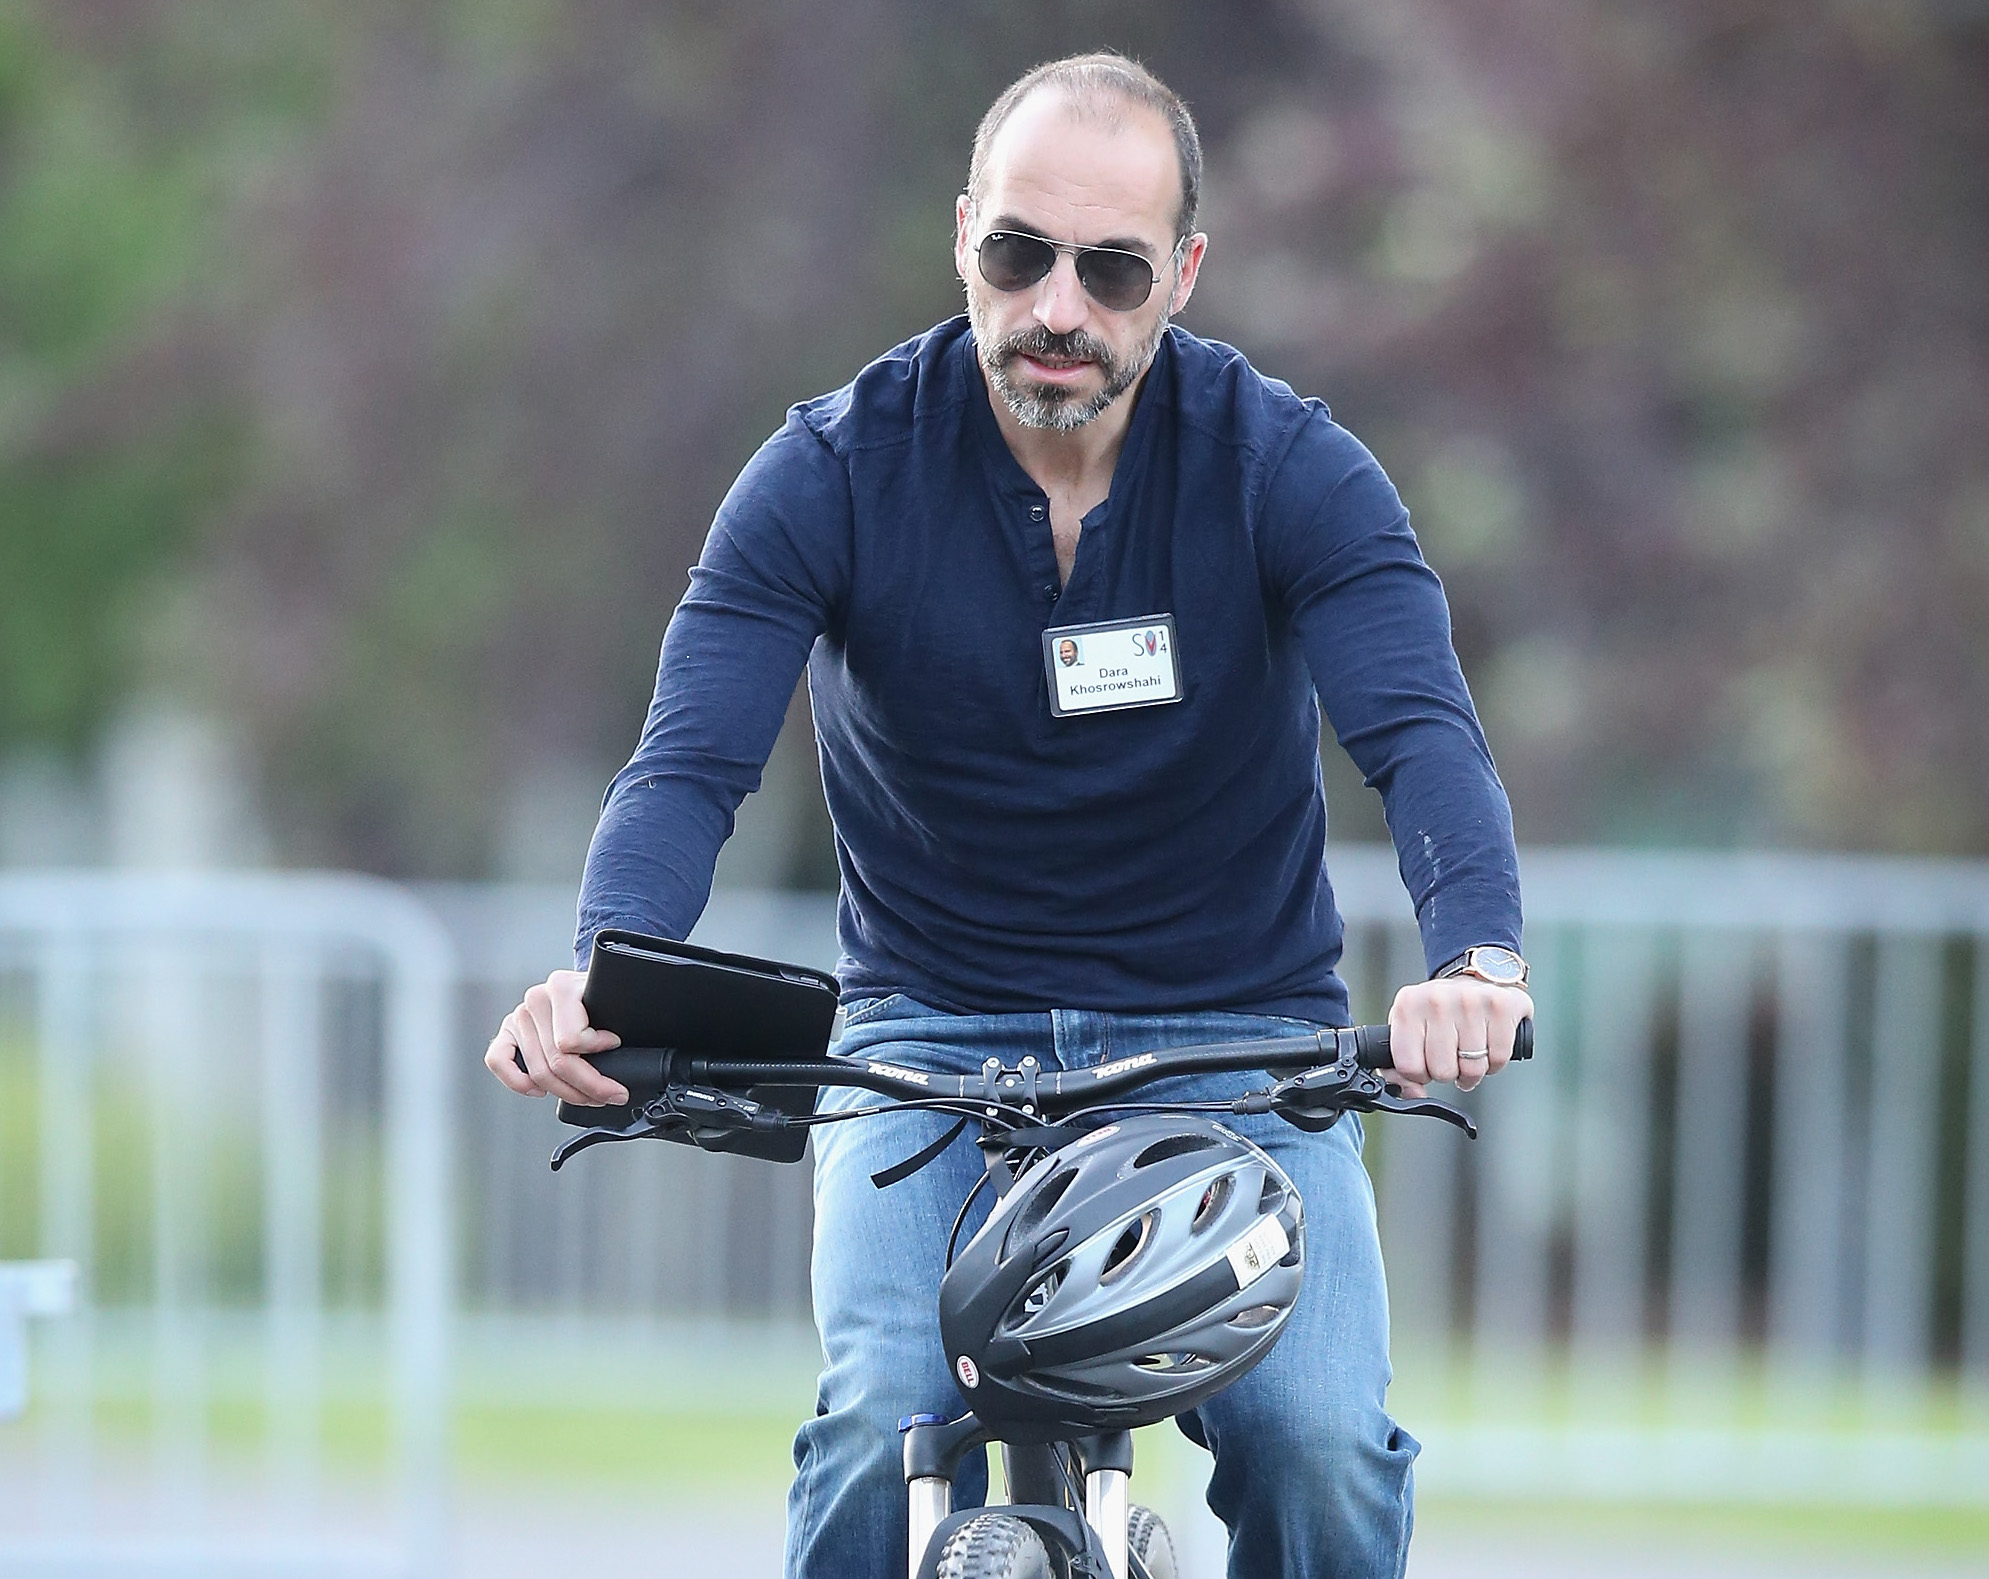 Uber CEO Dara Khosrowshahi on a bicycle